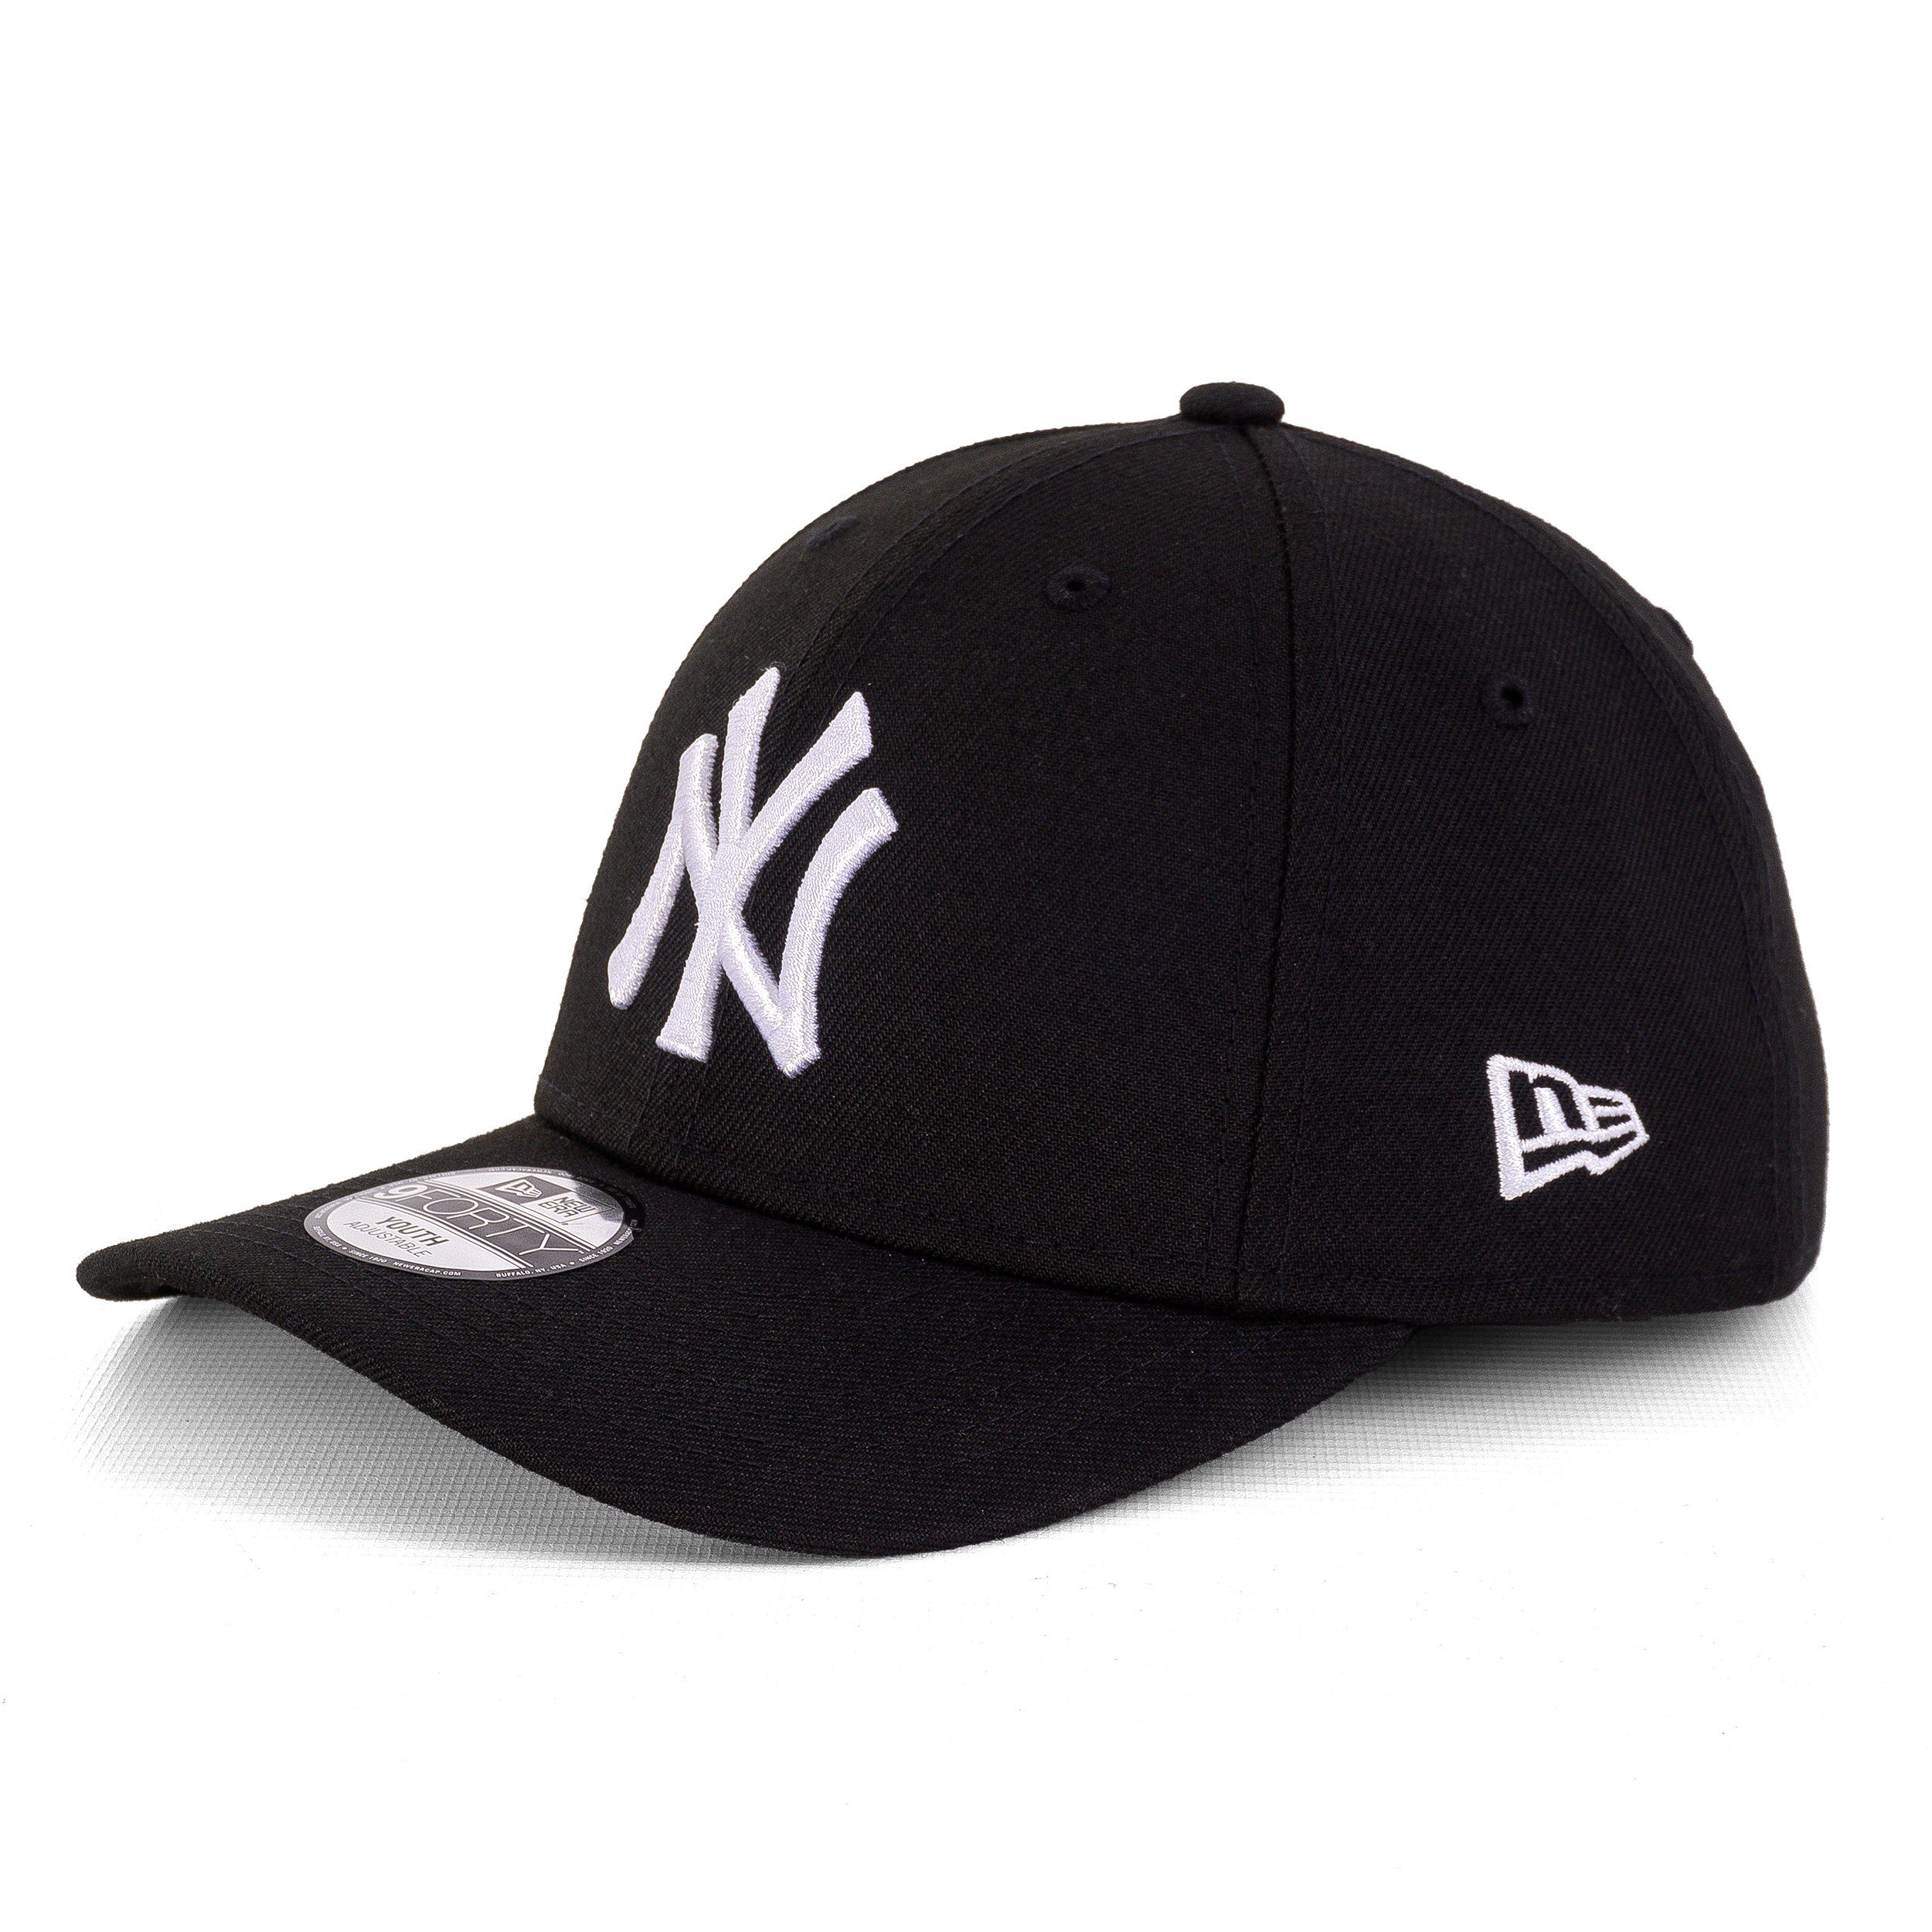 New Yankees Baseball York New KID9Forty New Cap Cap Era Era